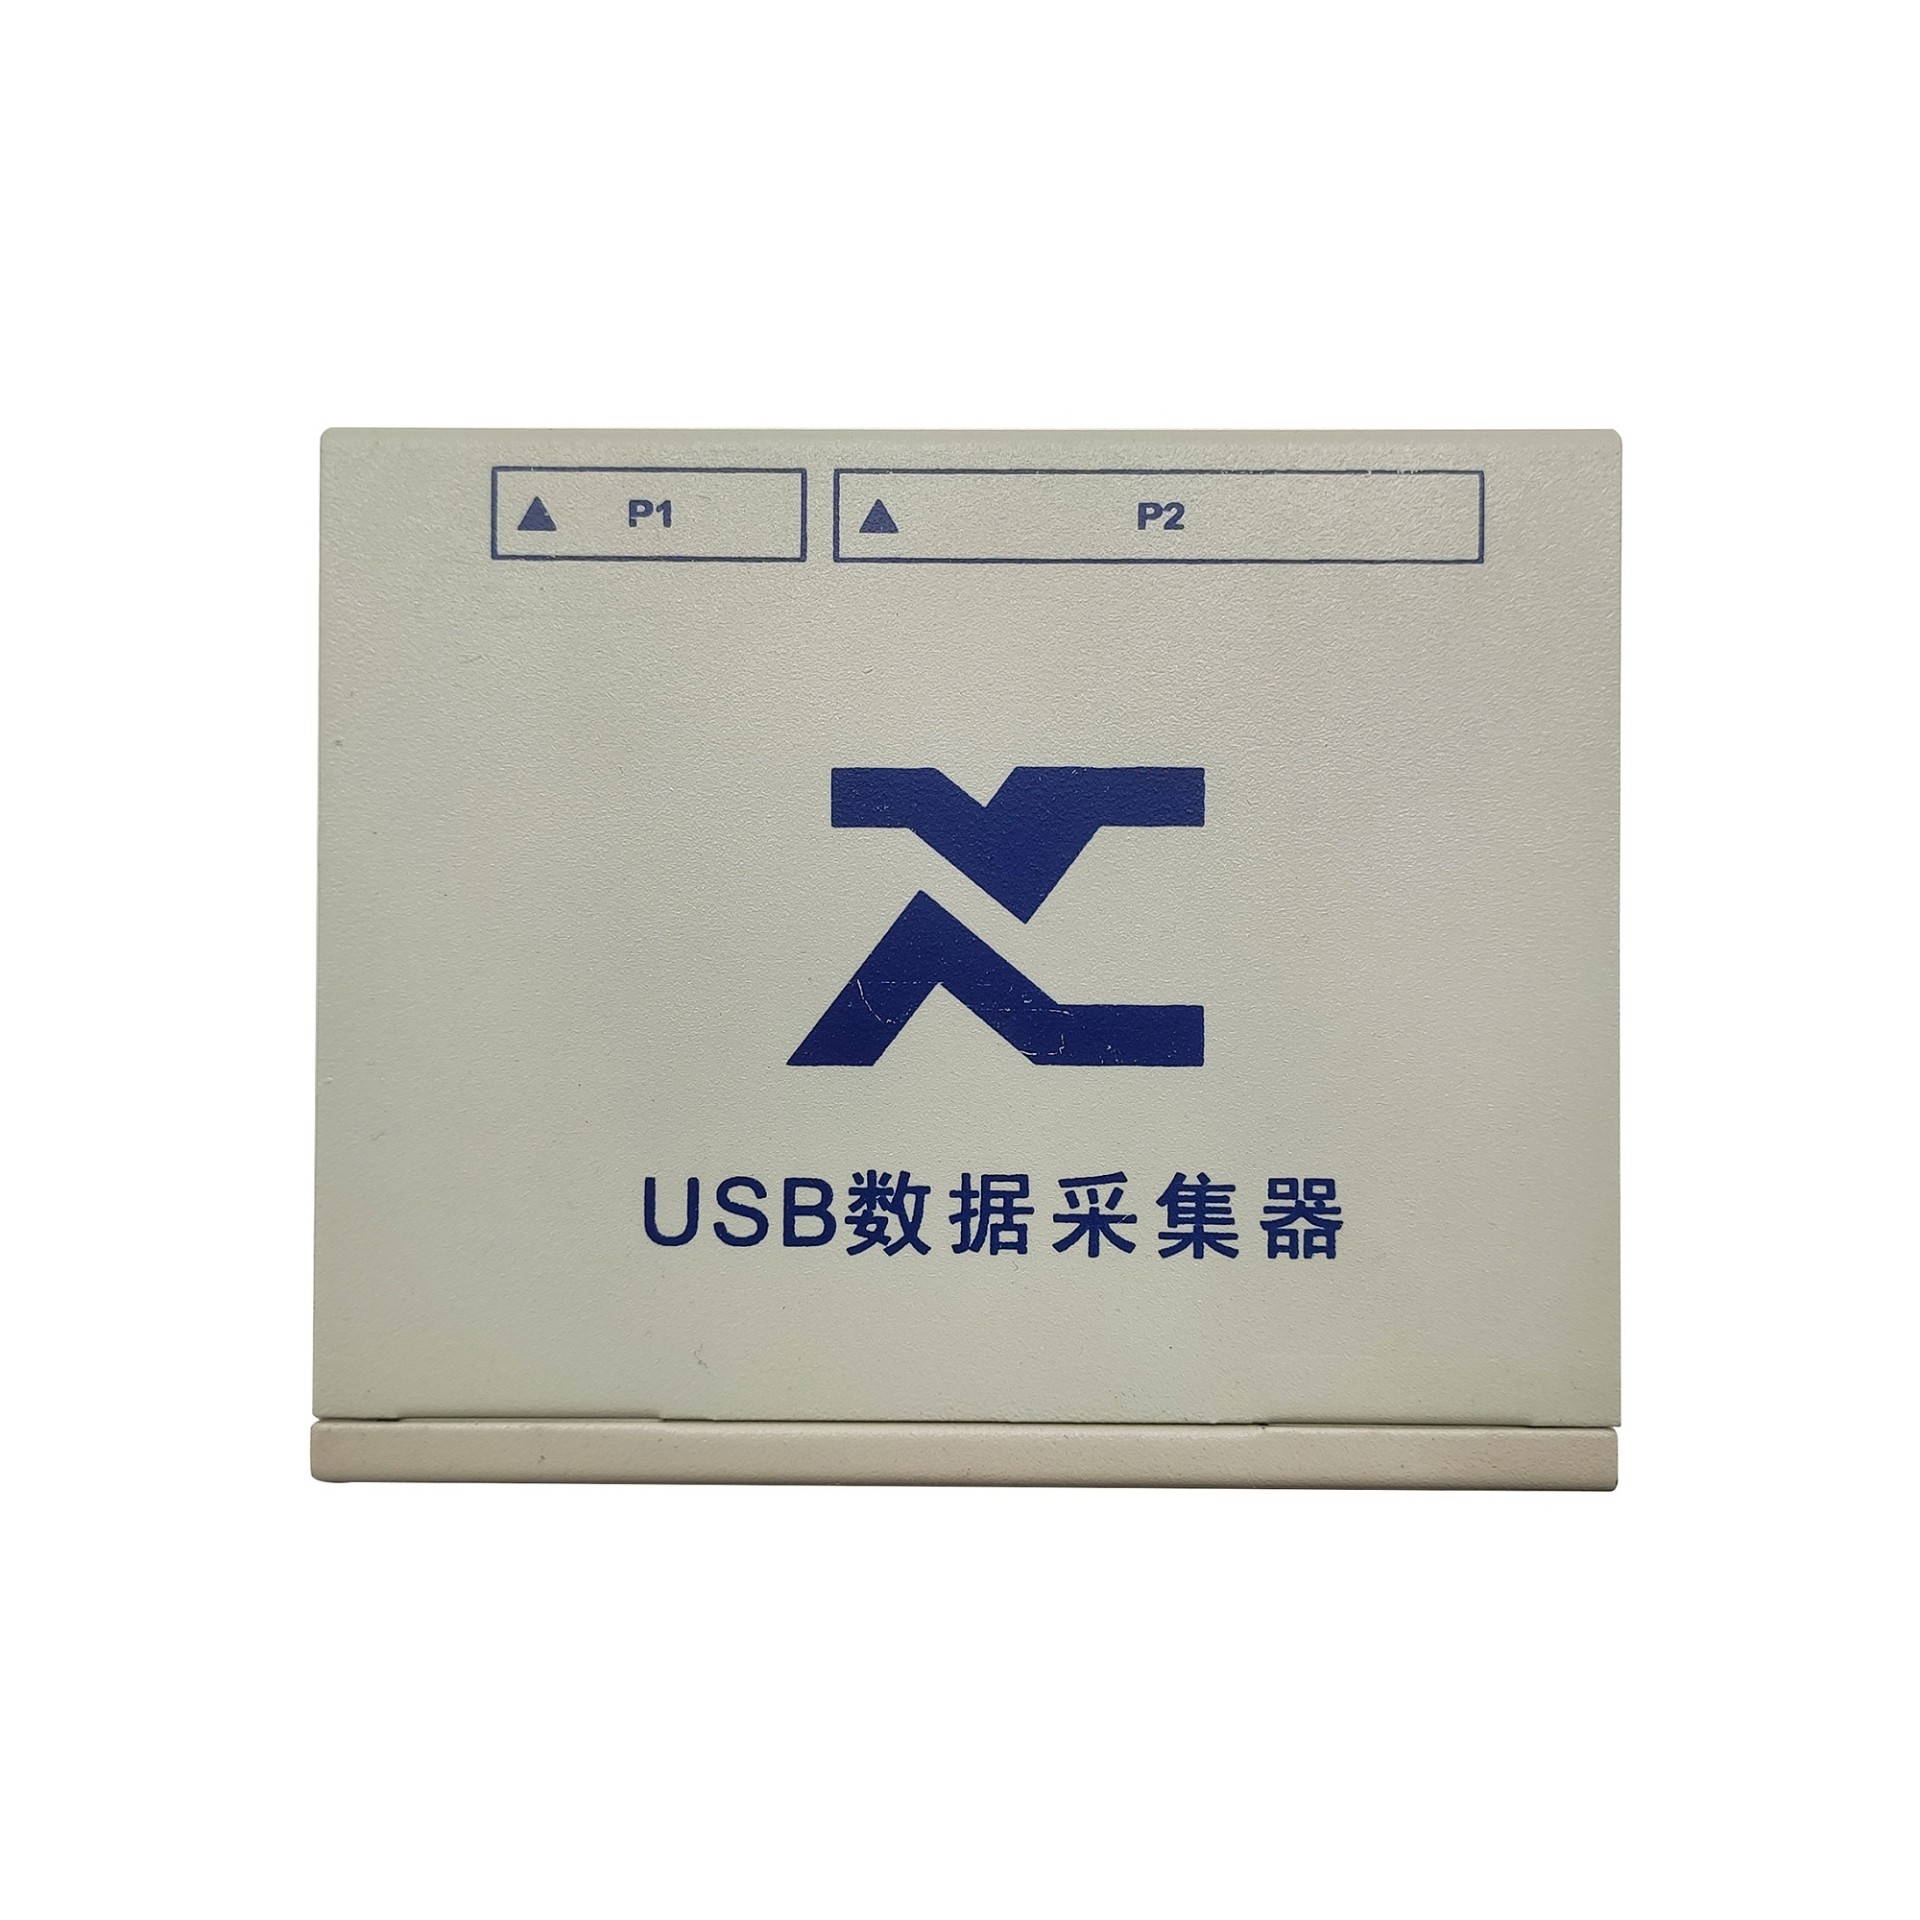 USB-1203